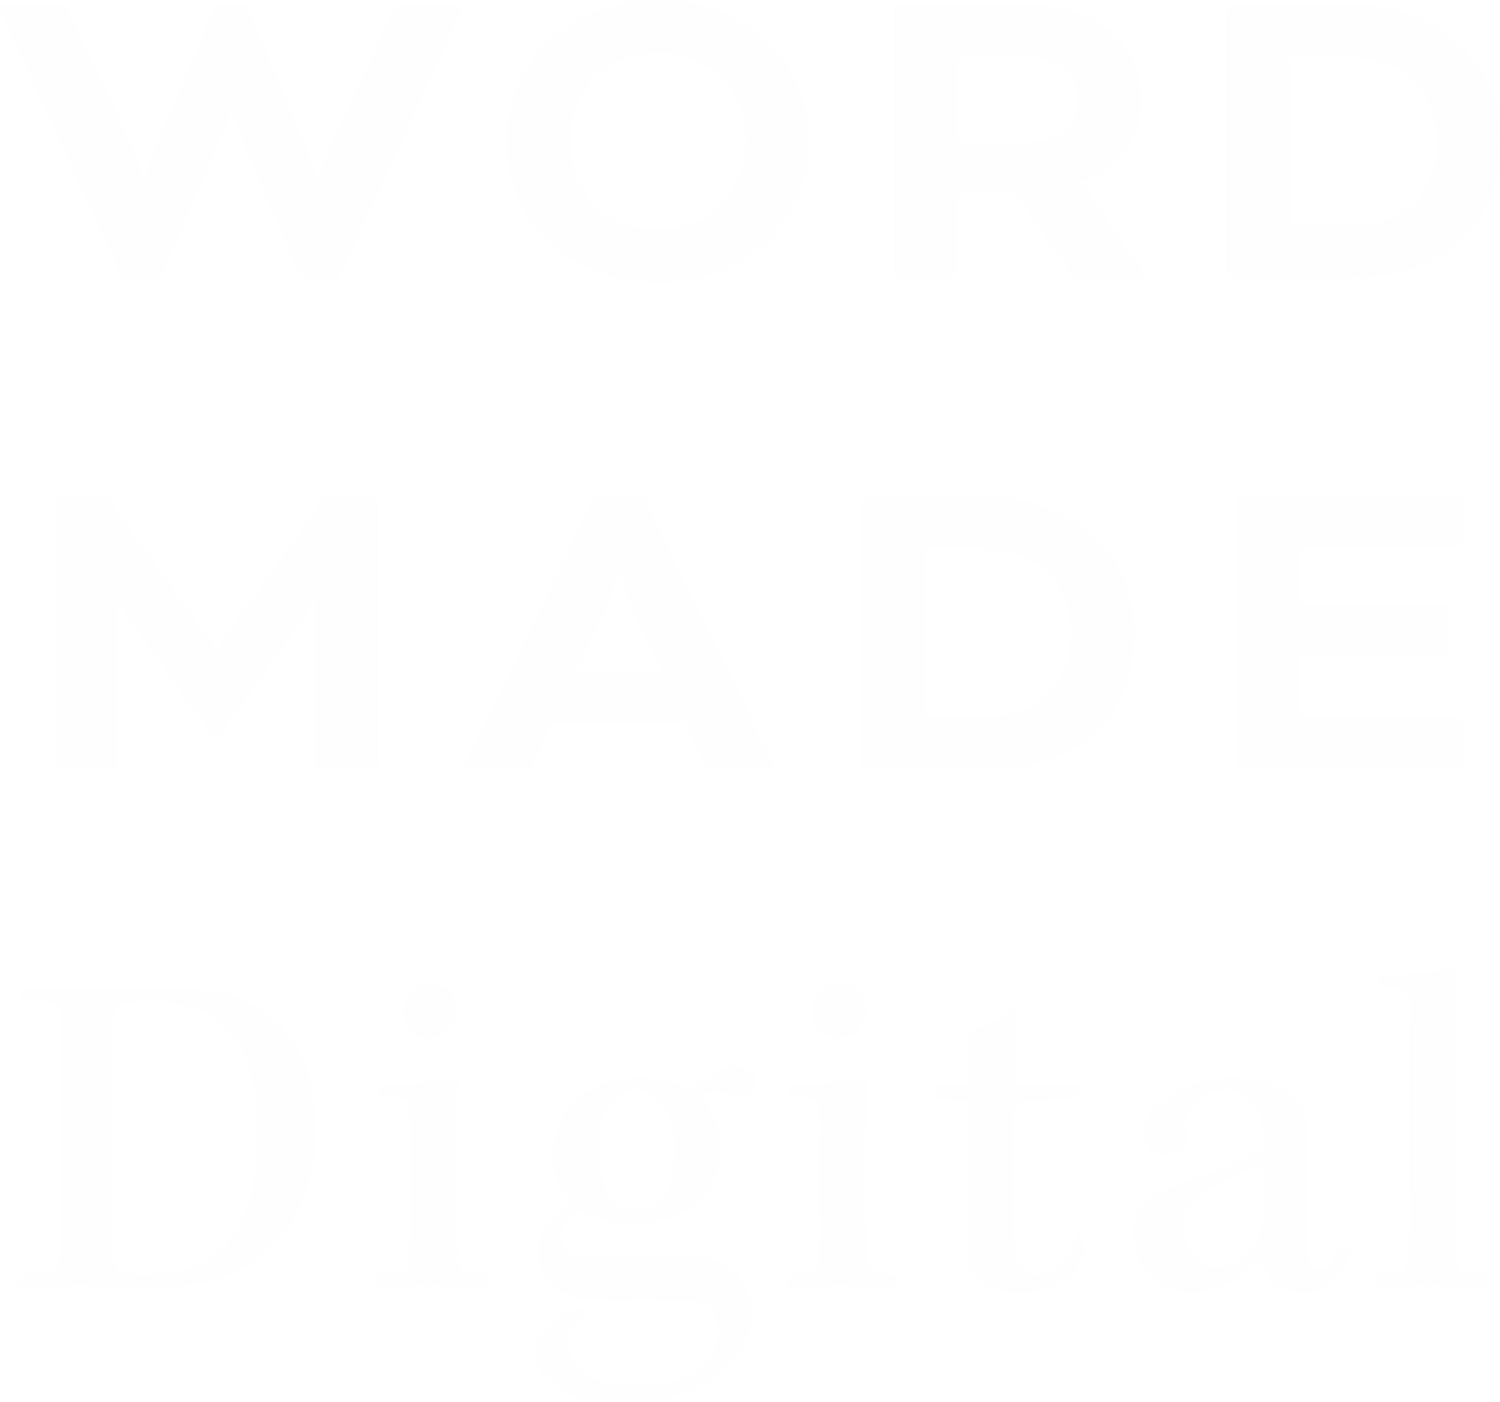 Word Made Digital